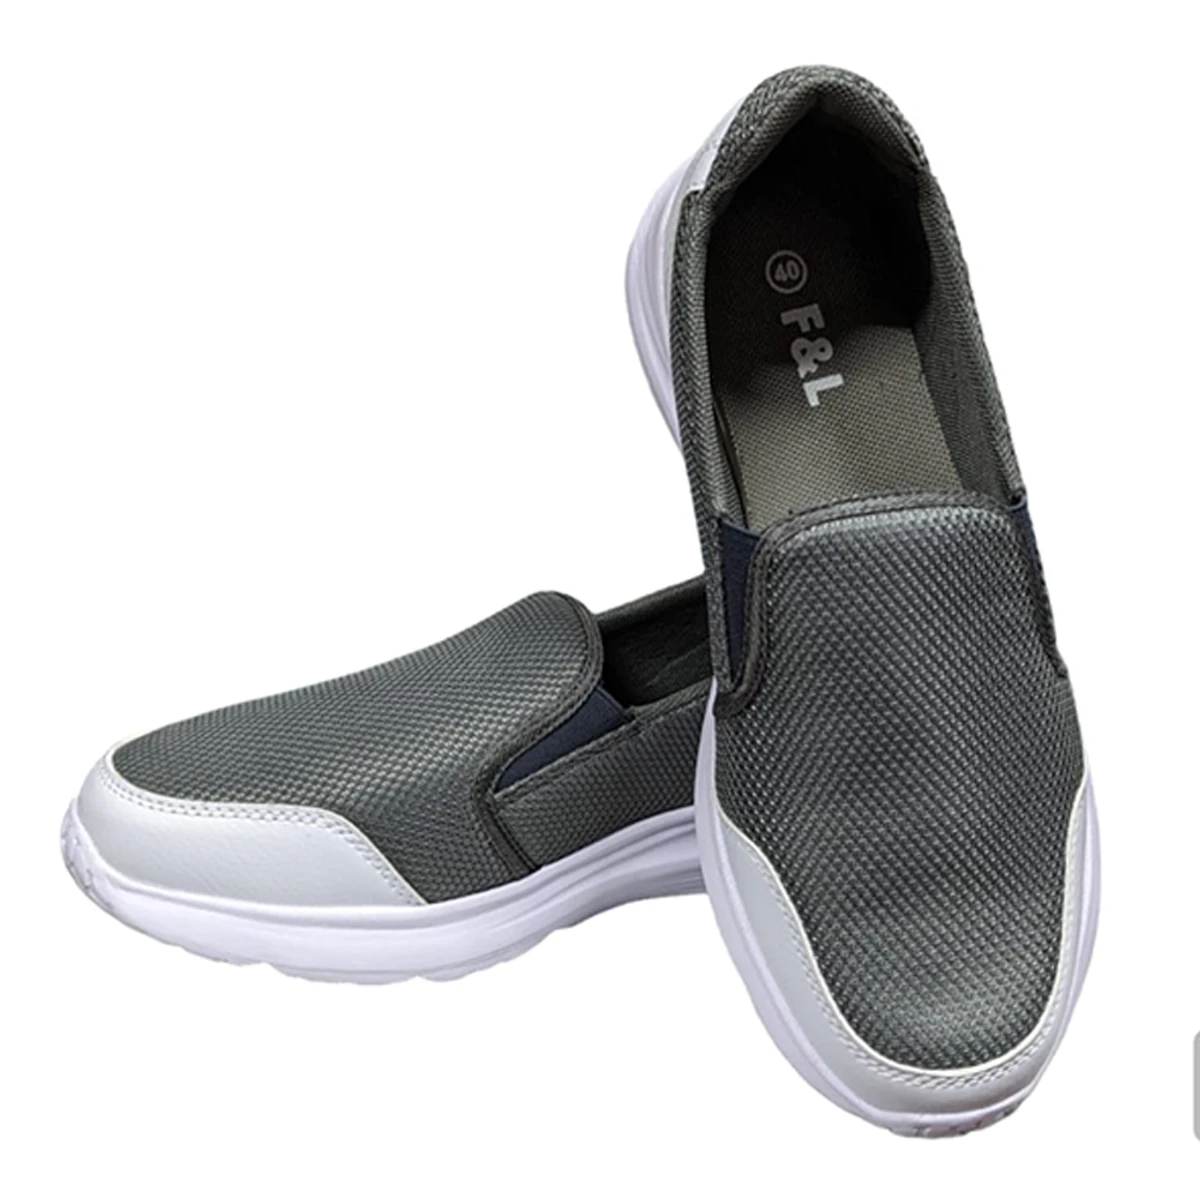 Lightweight Unisex Mesh Walking Sports Shoes - Grey - FLMN-20